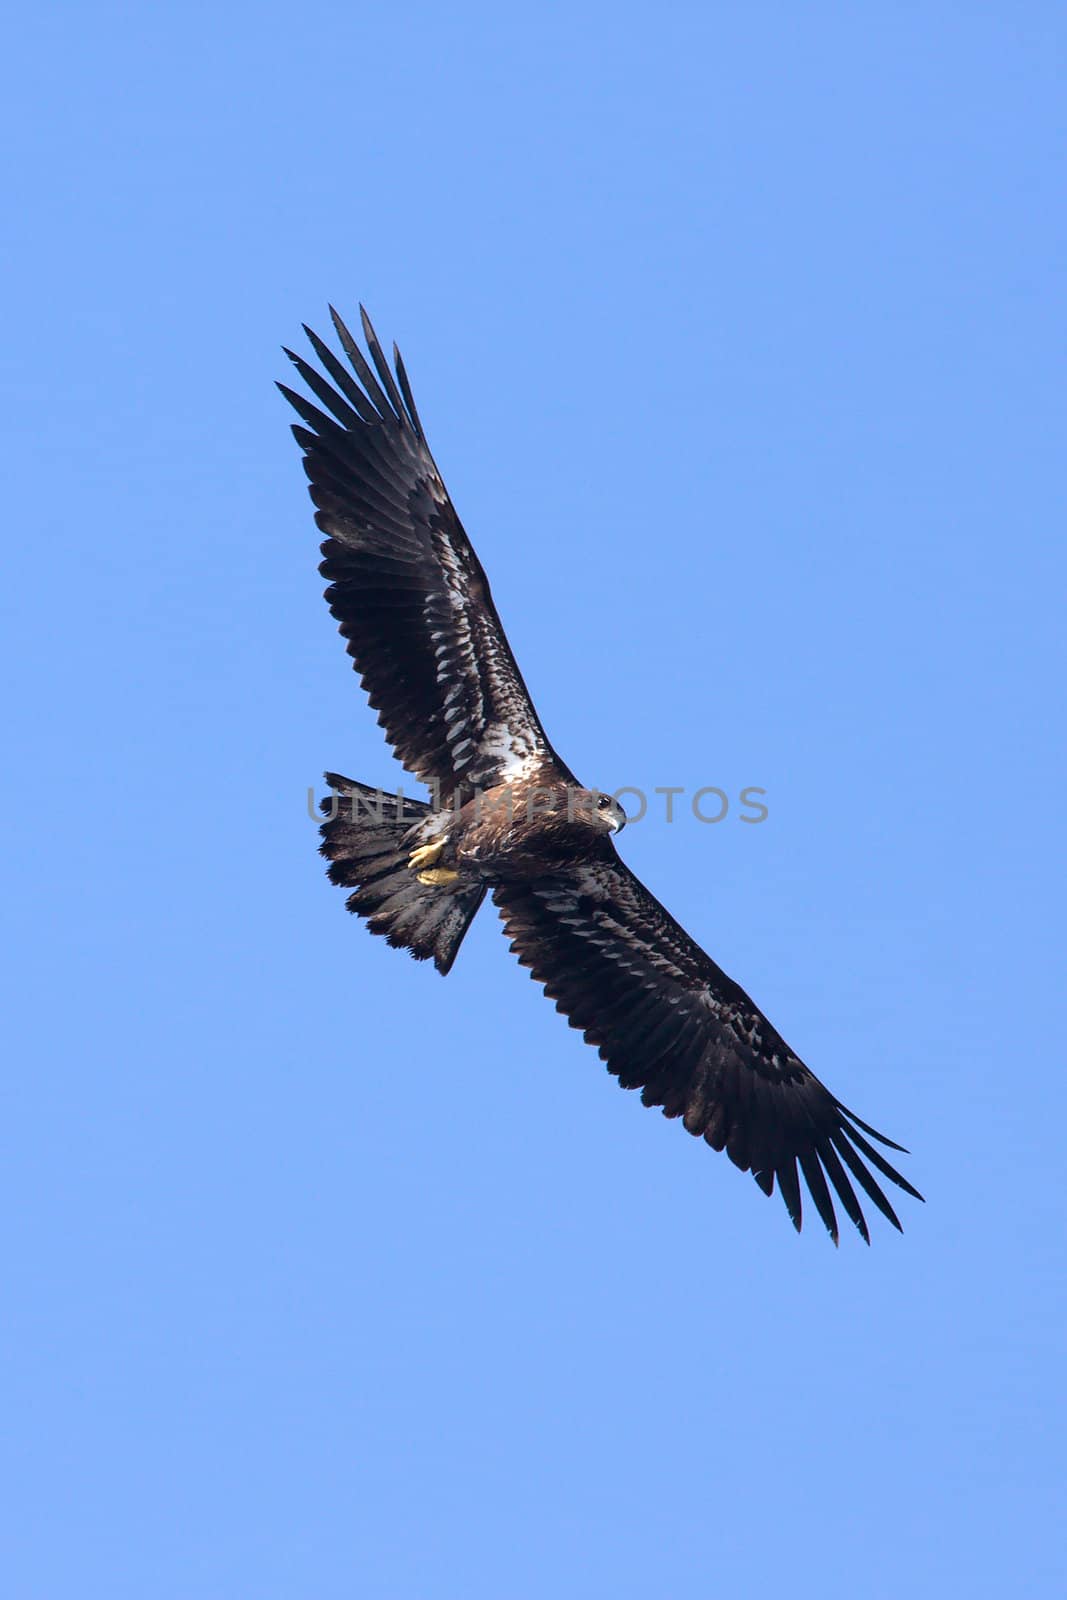 A Juvenile American Bald Eagle soaring high above.